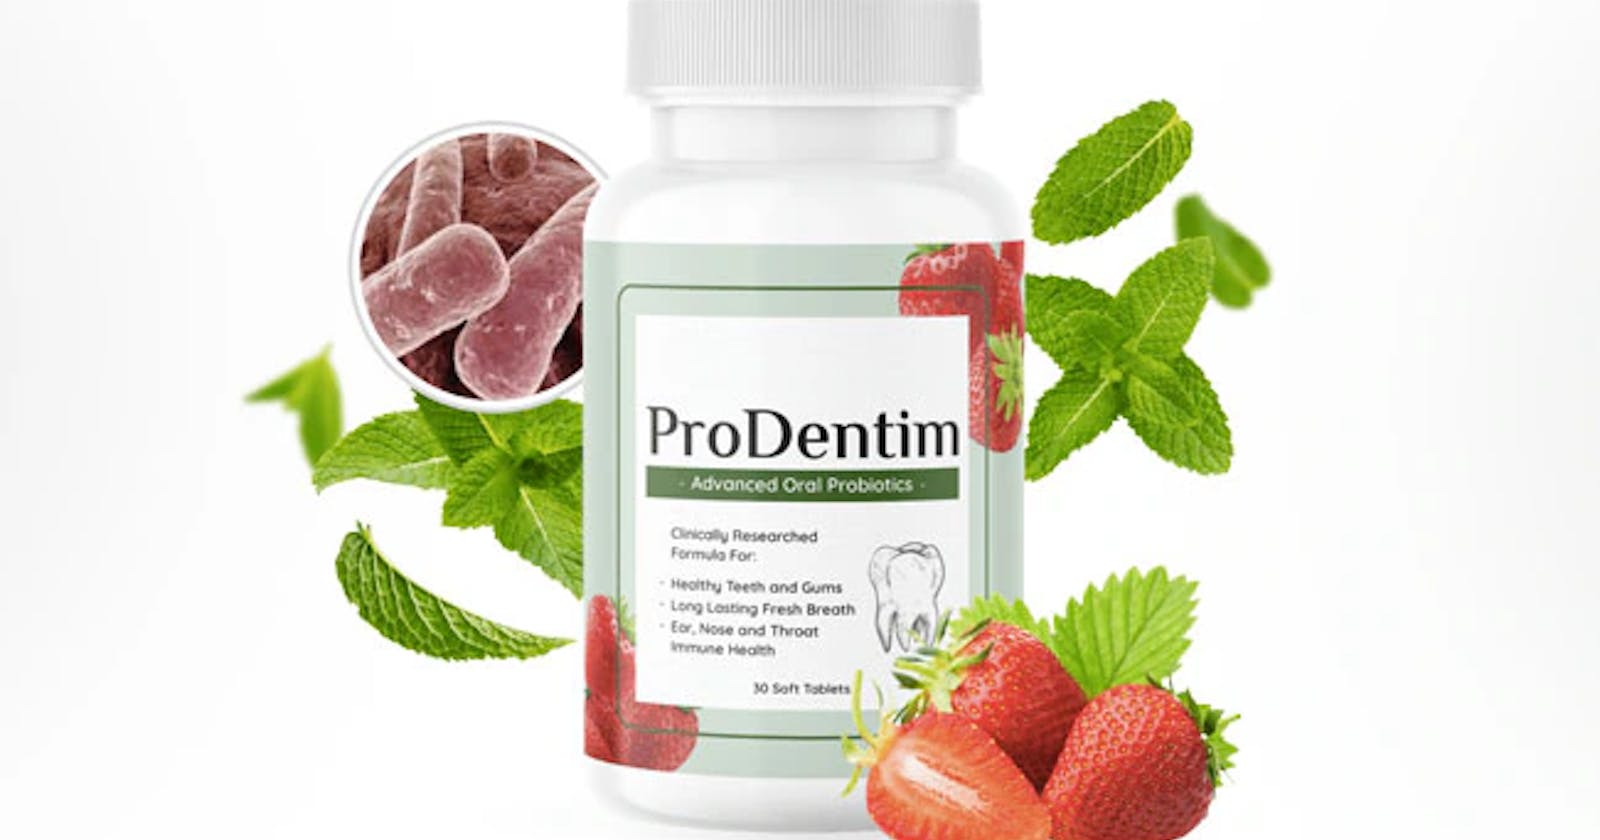 ProDentim: Revolutionizing Oral Health with Probiotics!